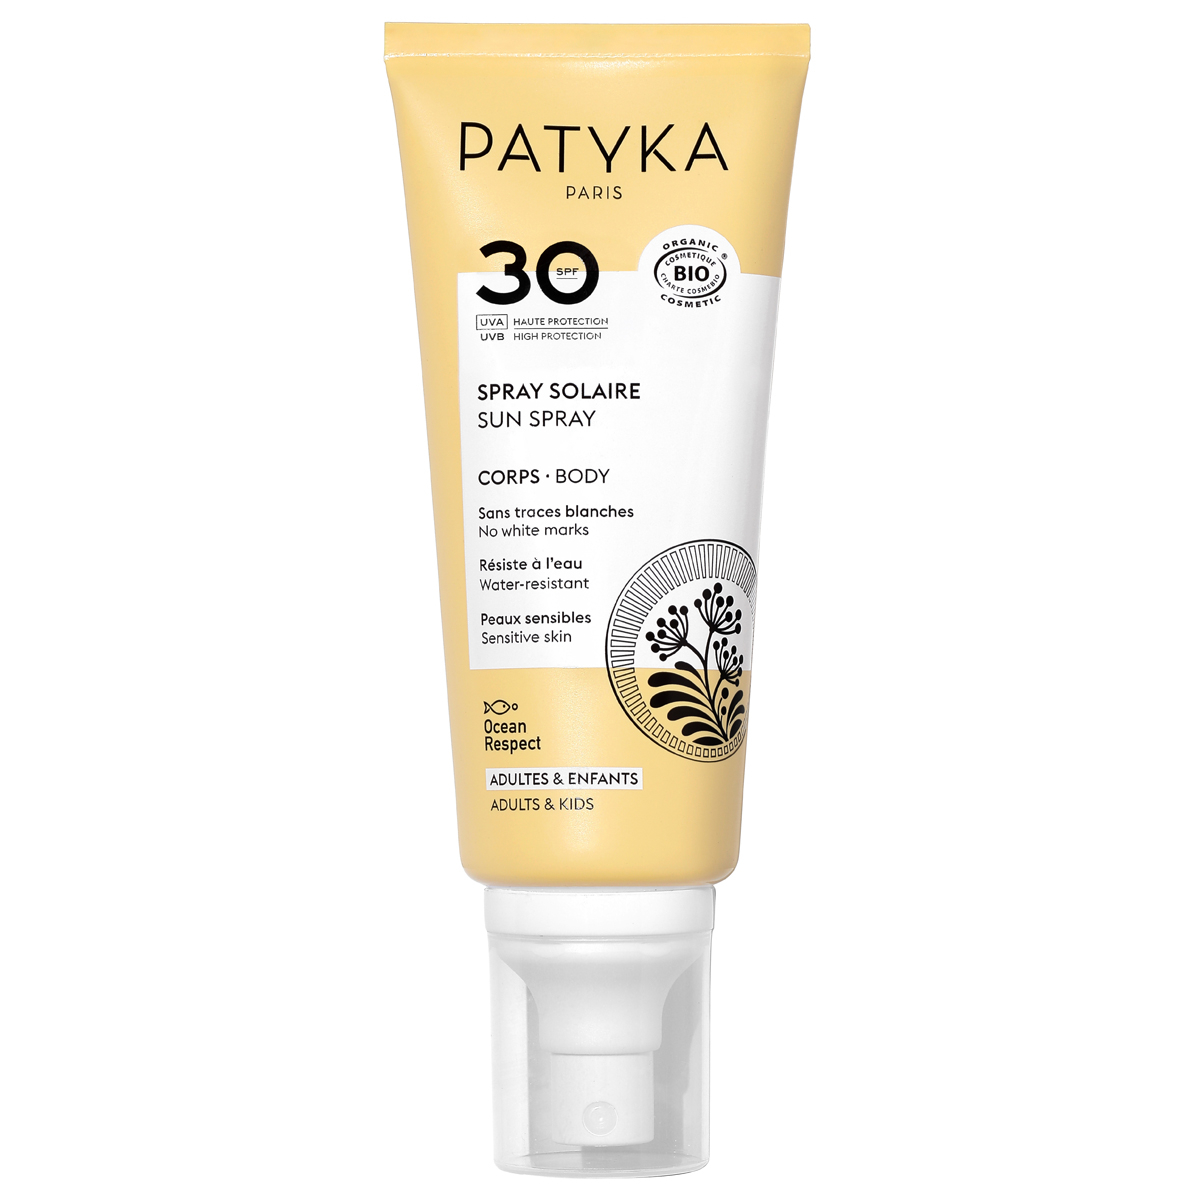 SPF 30 body sunscreen